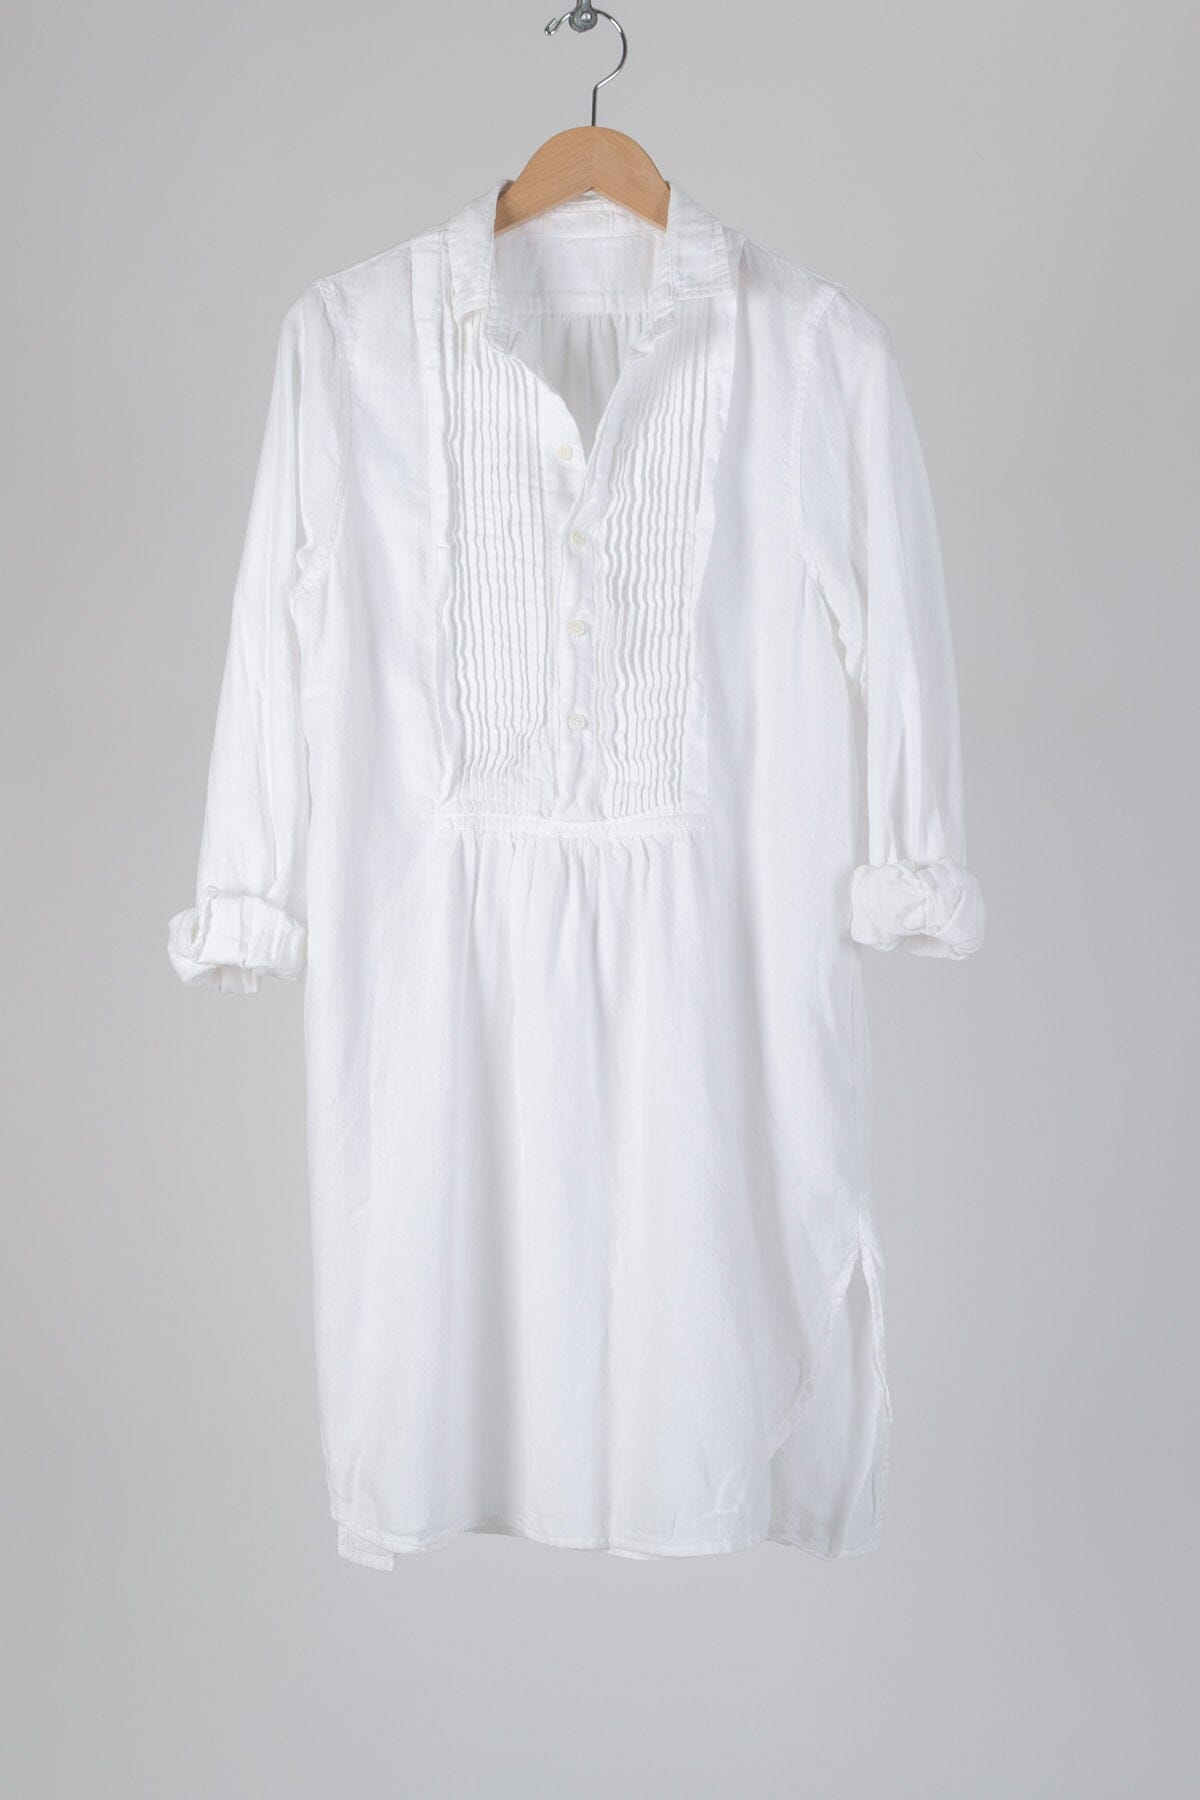 Annette - Textured Cotton S13 - Spring 4269 CP Shades white 4269